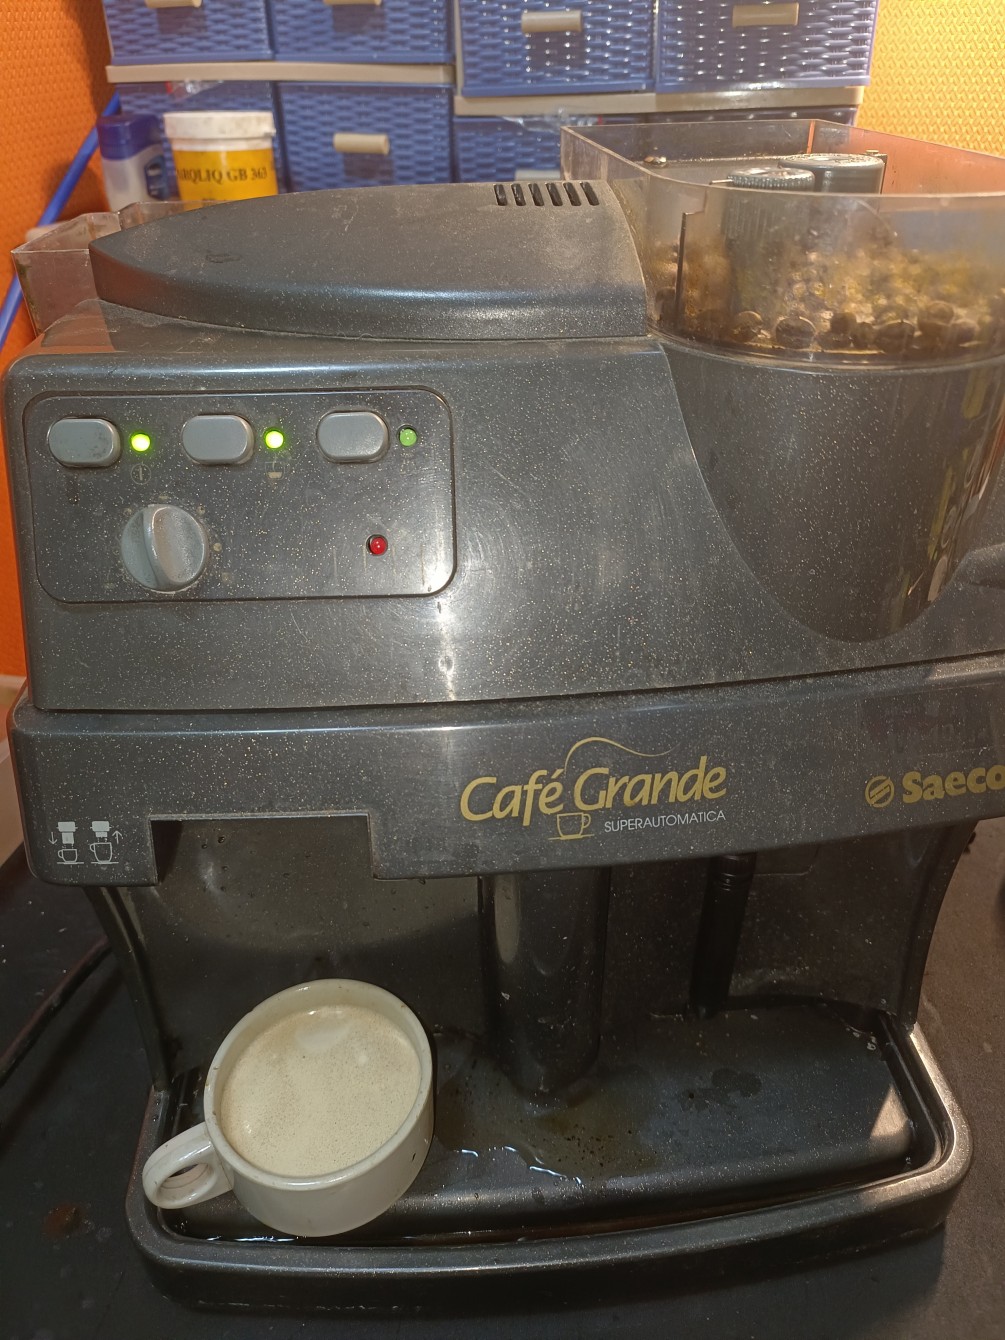 saeco -Cafe Xrande-trevl-全自動咖啡機--漏水-墊圈-維修處理